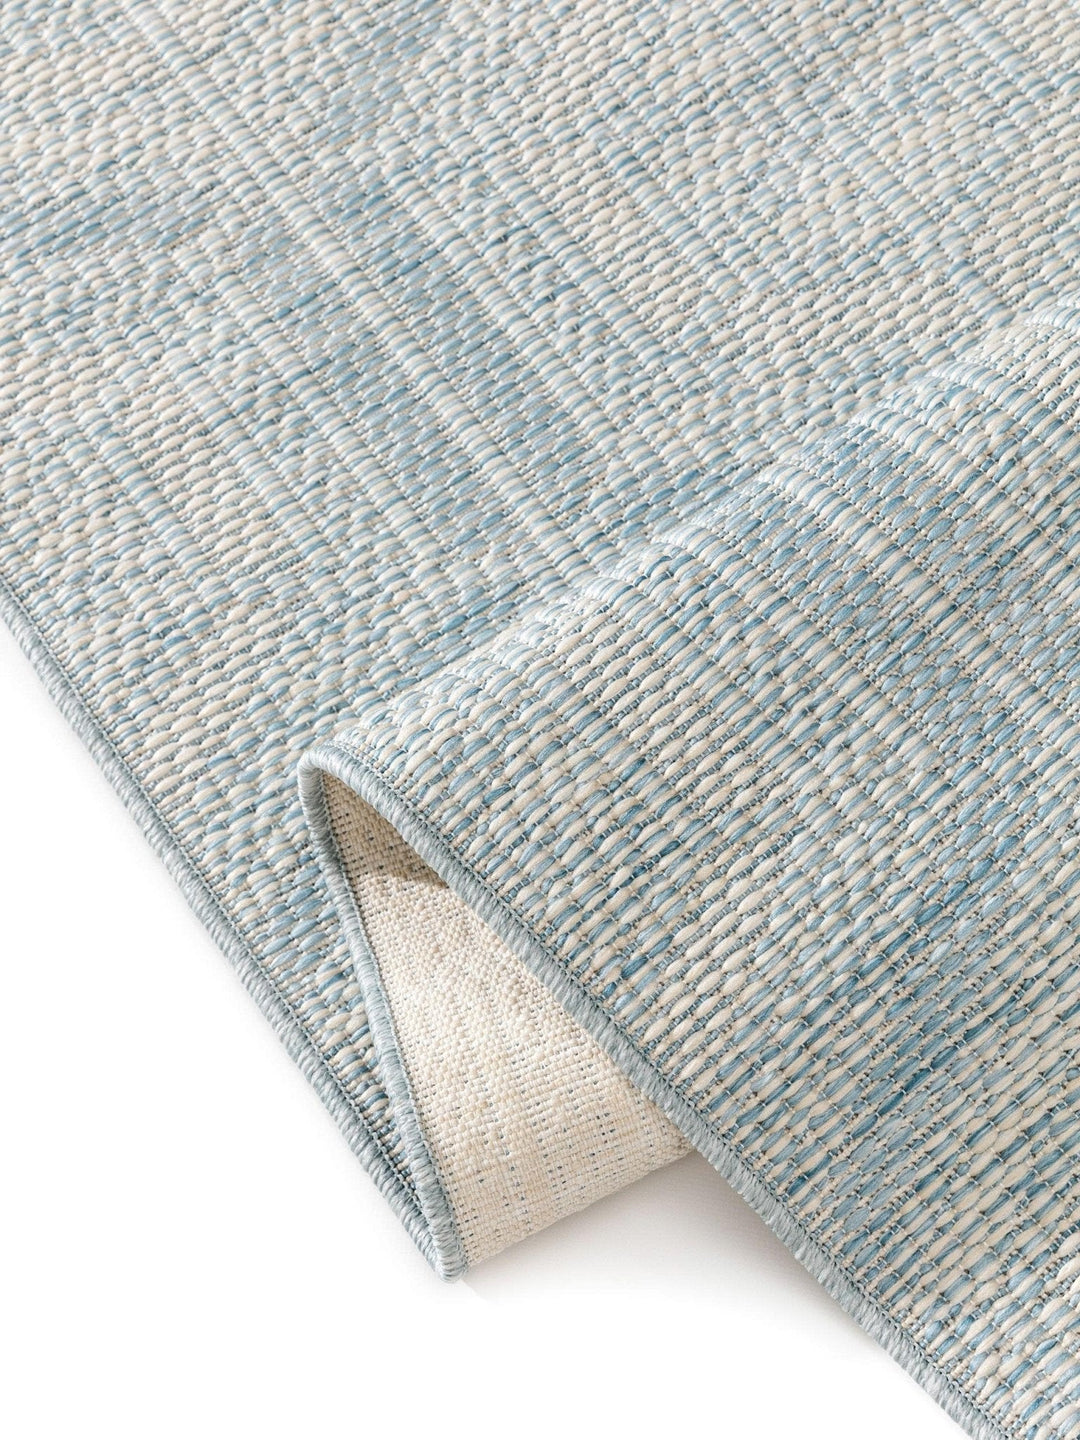 In- & Outdoor-Teppich Bronco Blau - benuta Nest - RugDreams®